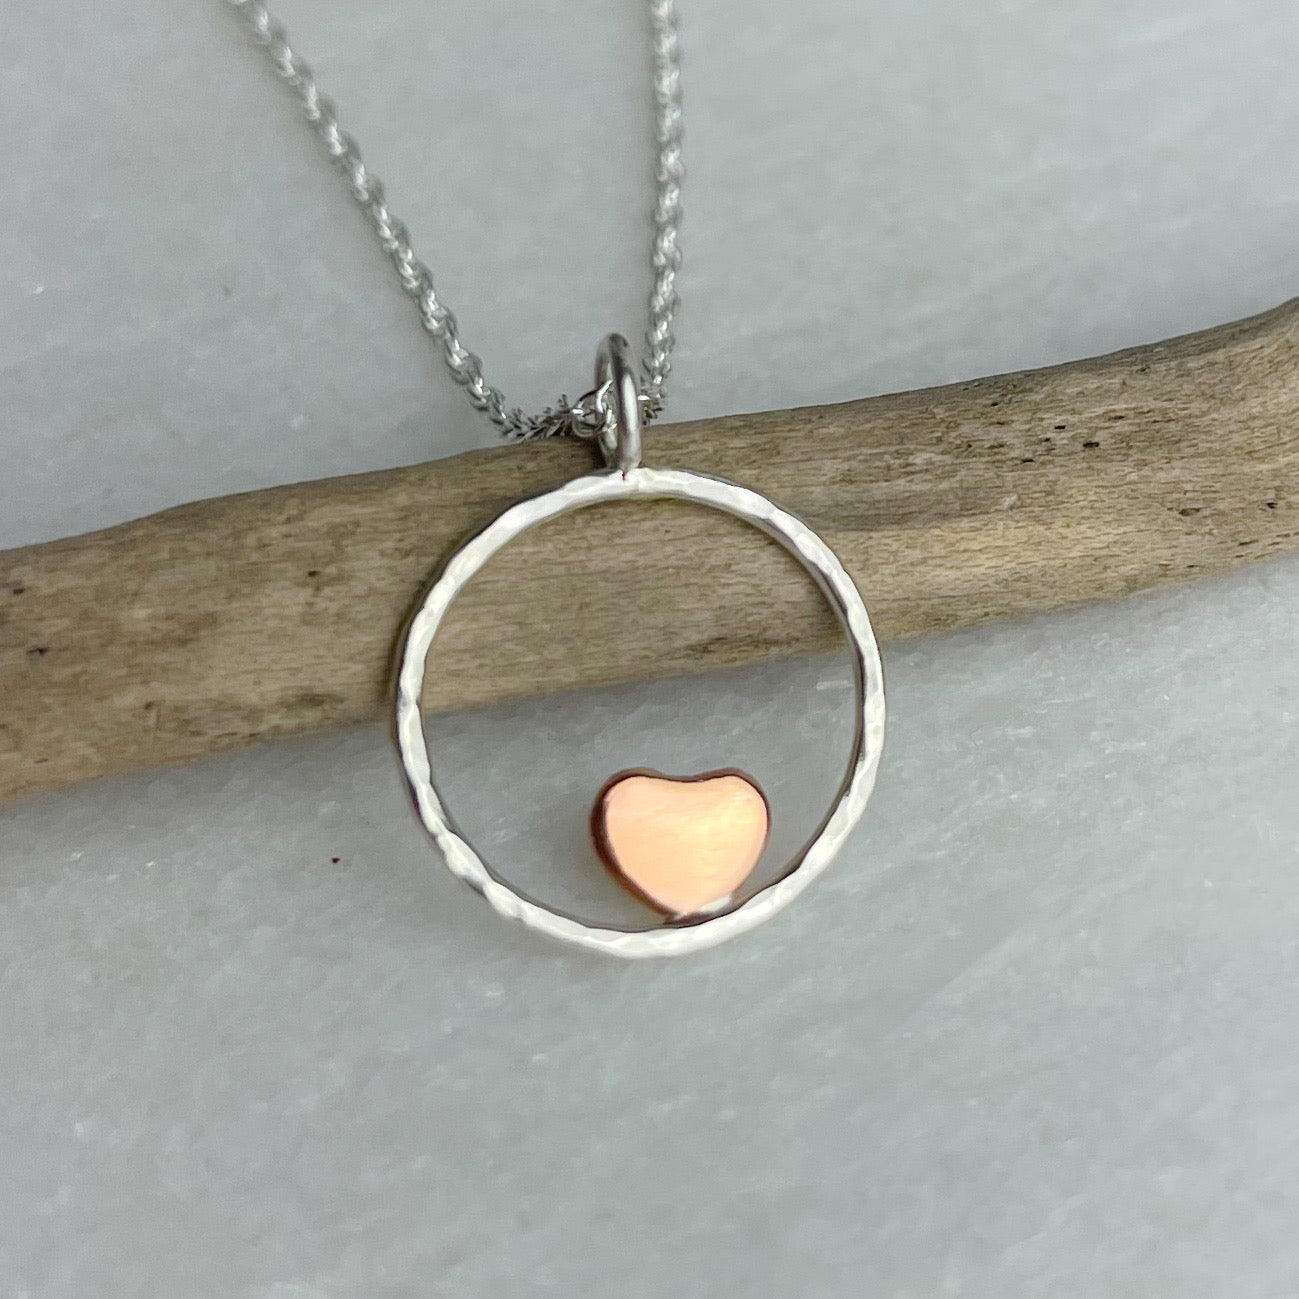 Copper Heart Hoop Necklace - The Nancy Smillie Shop - Art, Jewellery & Designer Gifts Glasgow